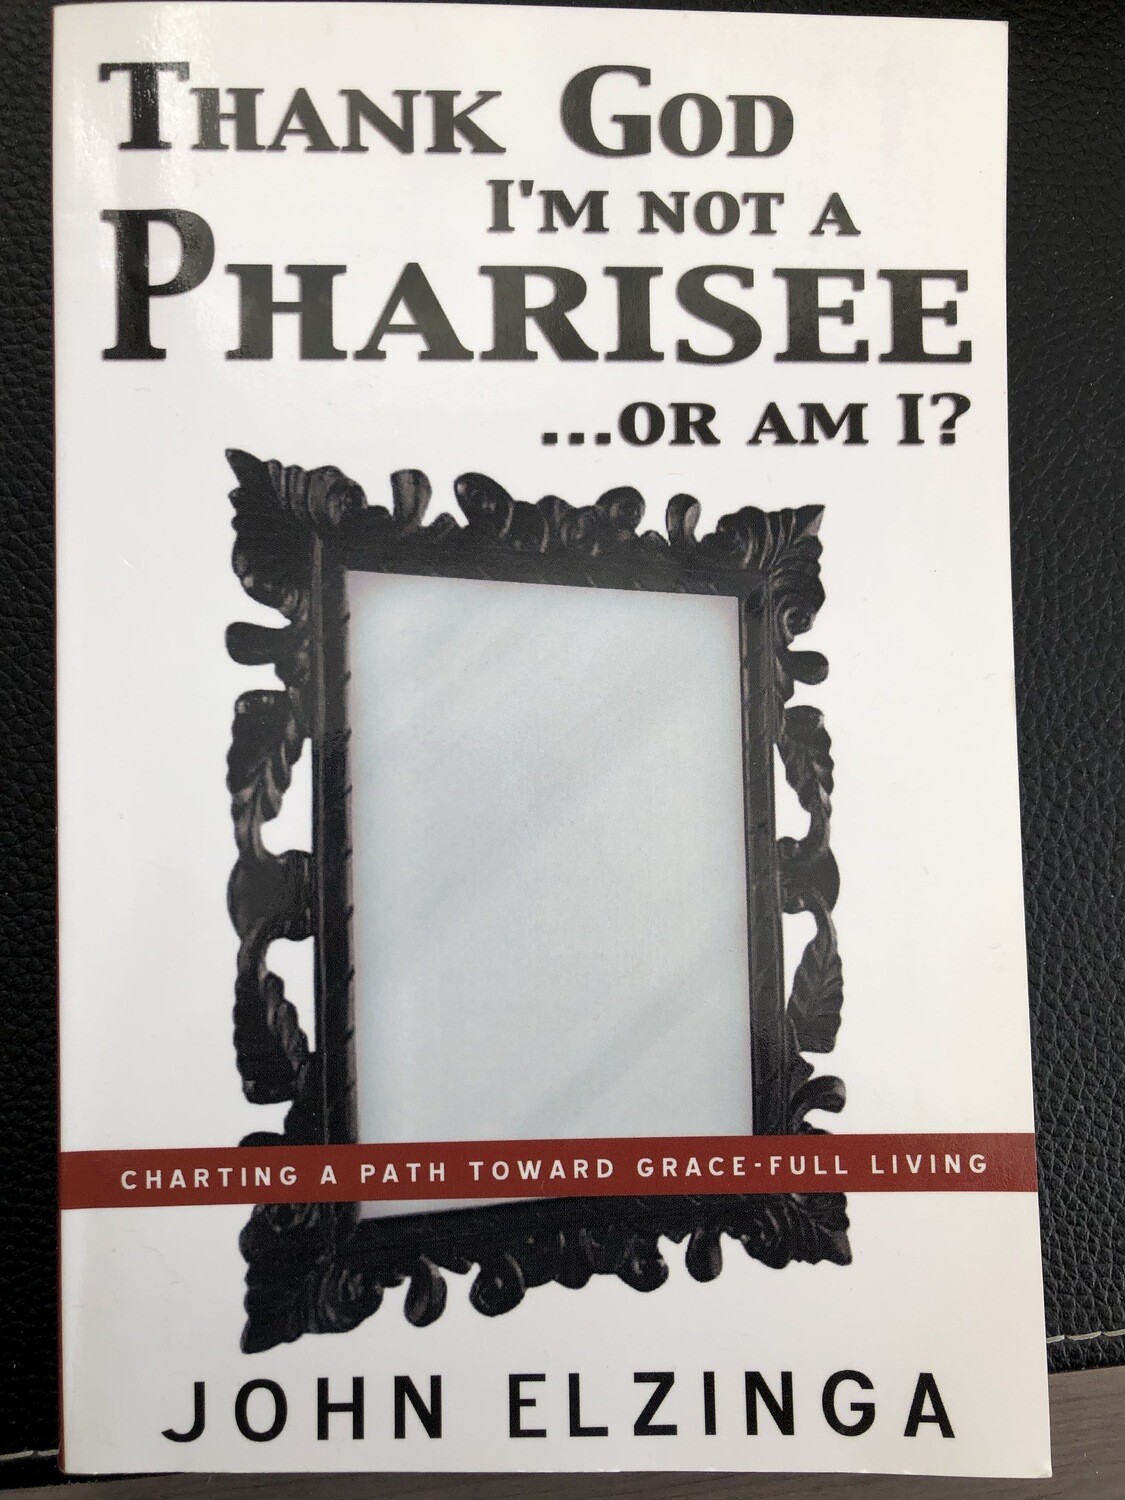 Thank God I'm Not a Pharisee....or am I?